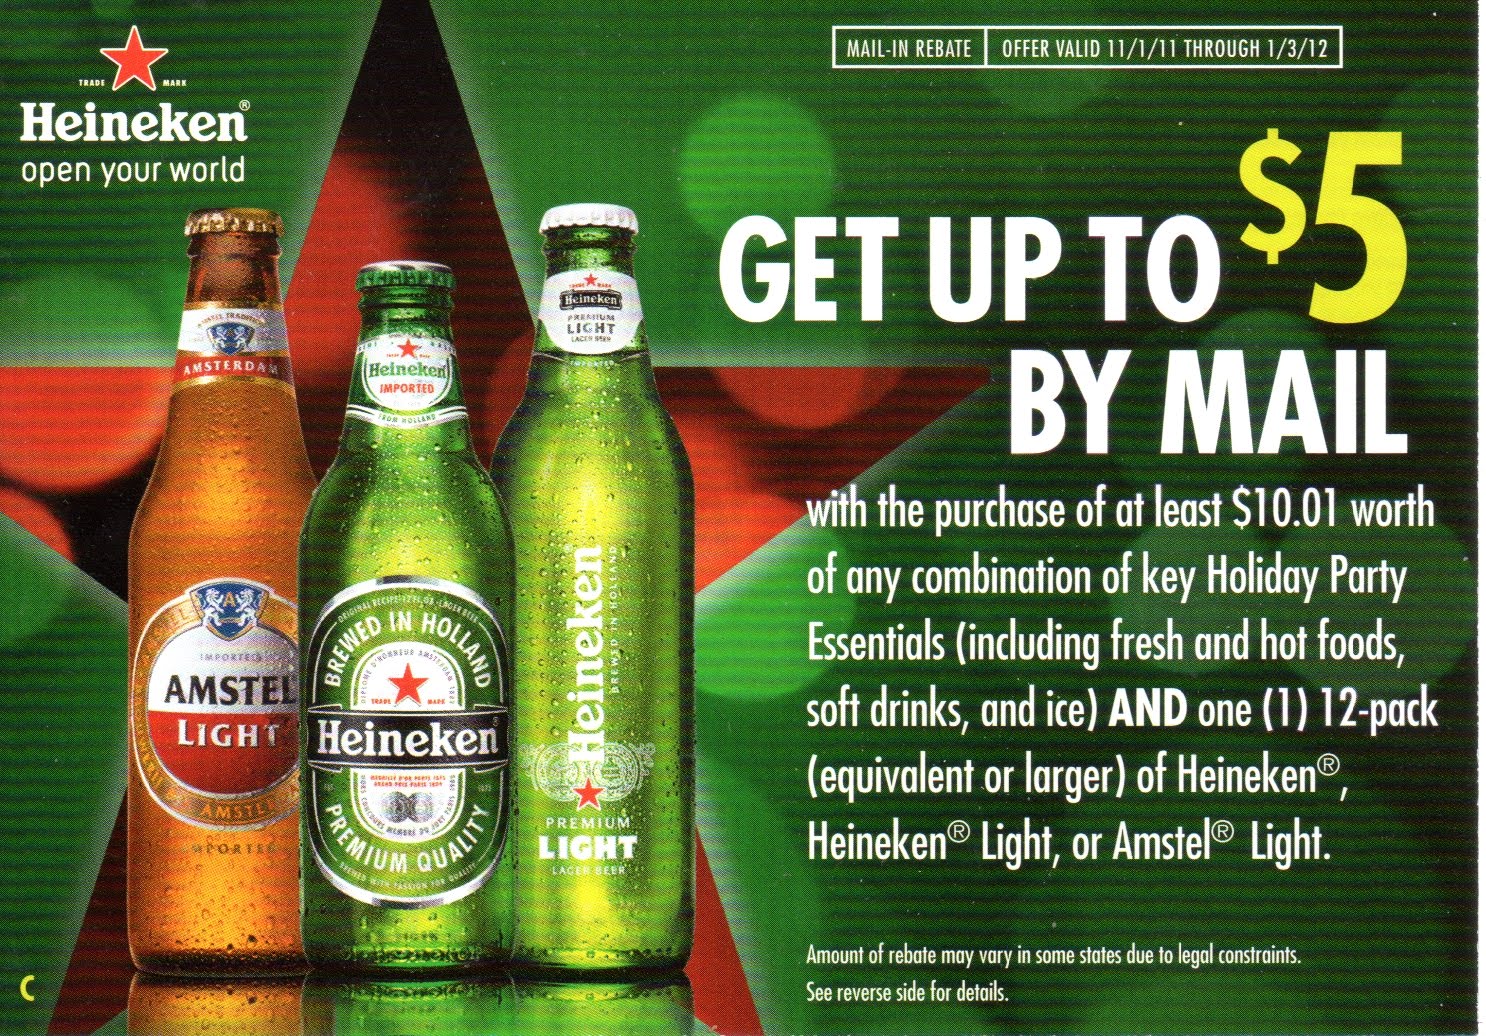 Coupon STL Heineken Beer Rebate Save 5 By Mail On Holiday Party 